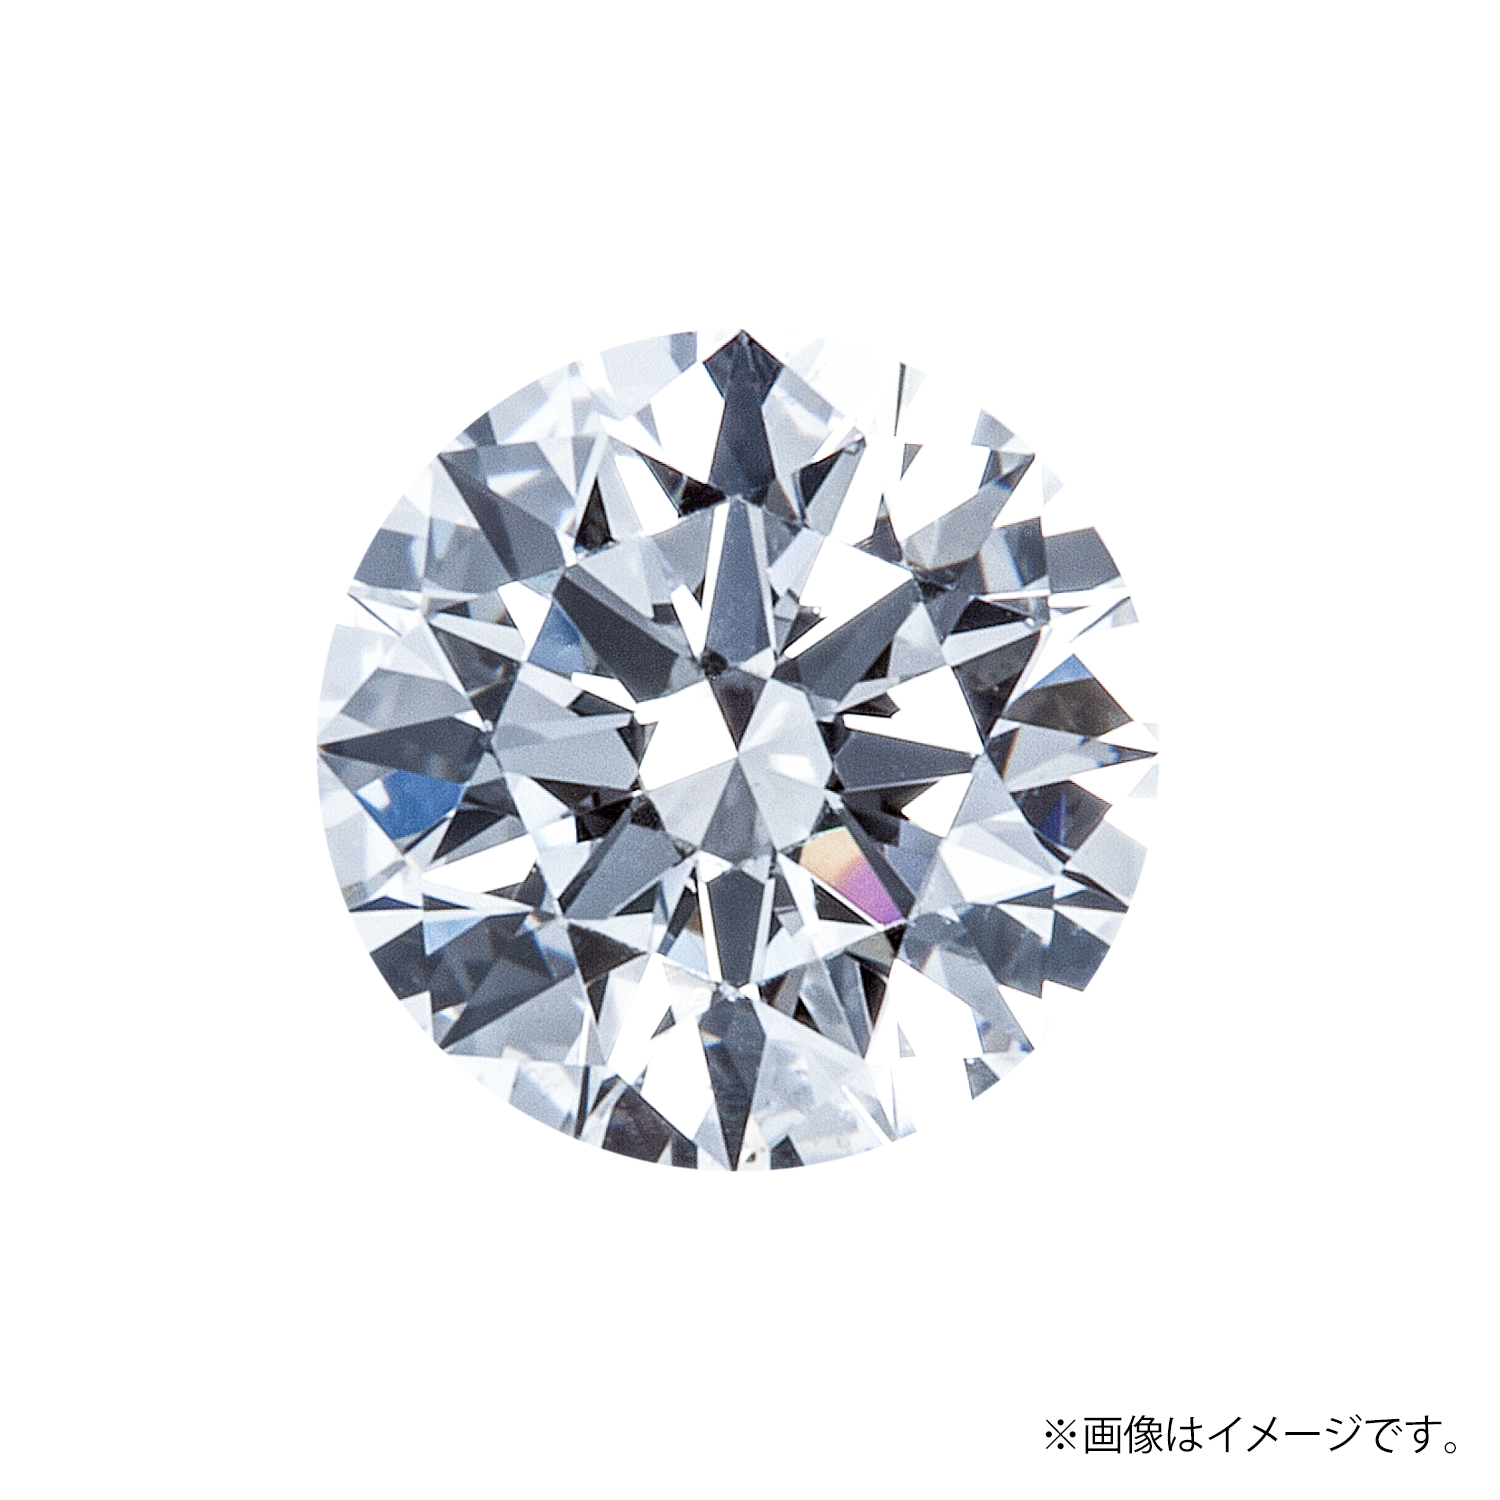 0.218ct Round ダイヤモンド / D / VVS1 / 3EX H&C